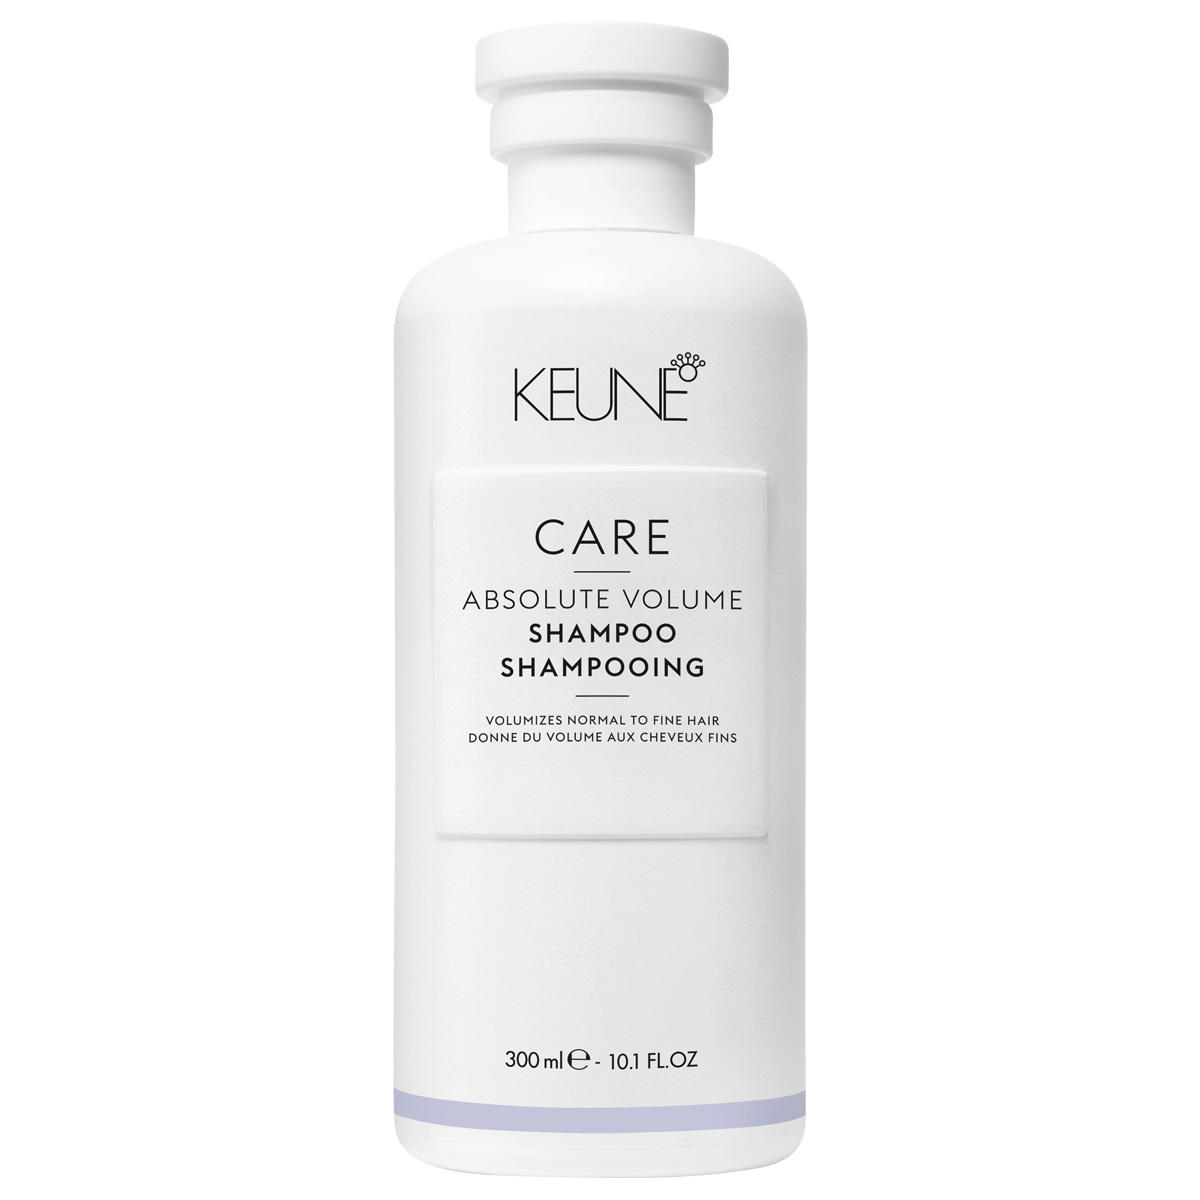 KEUNE CARE Absolute Volume Shampoo 300 ml - 1